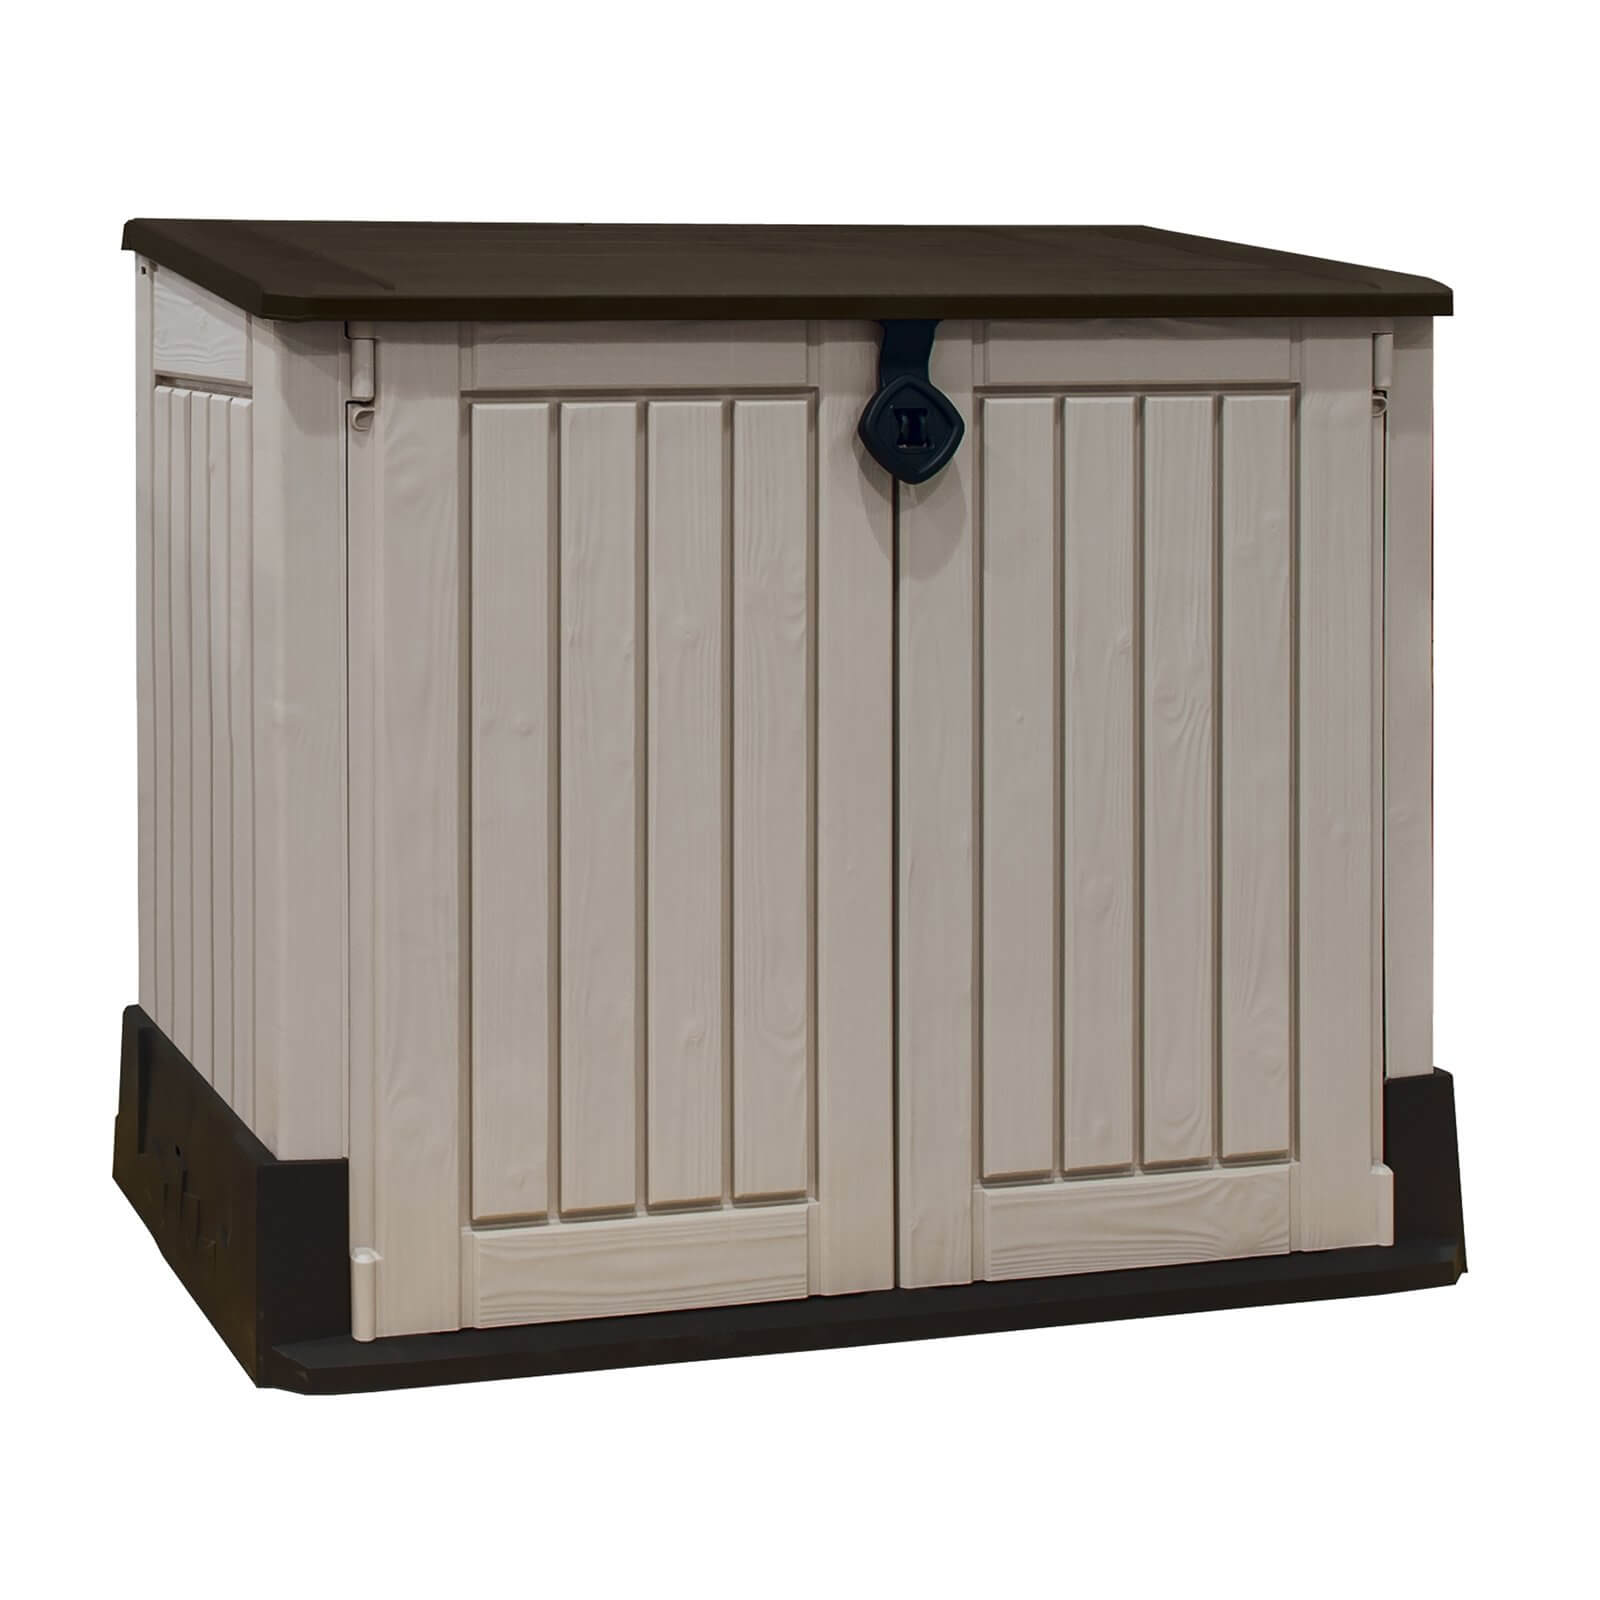 Keter Store It Out Midi Outdoor Garden Storage Box 845L - Beige/Brown